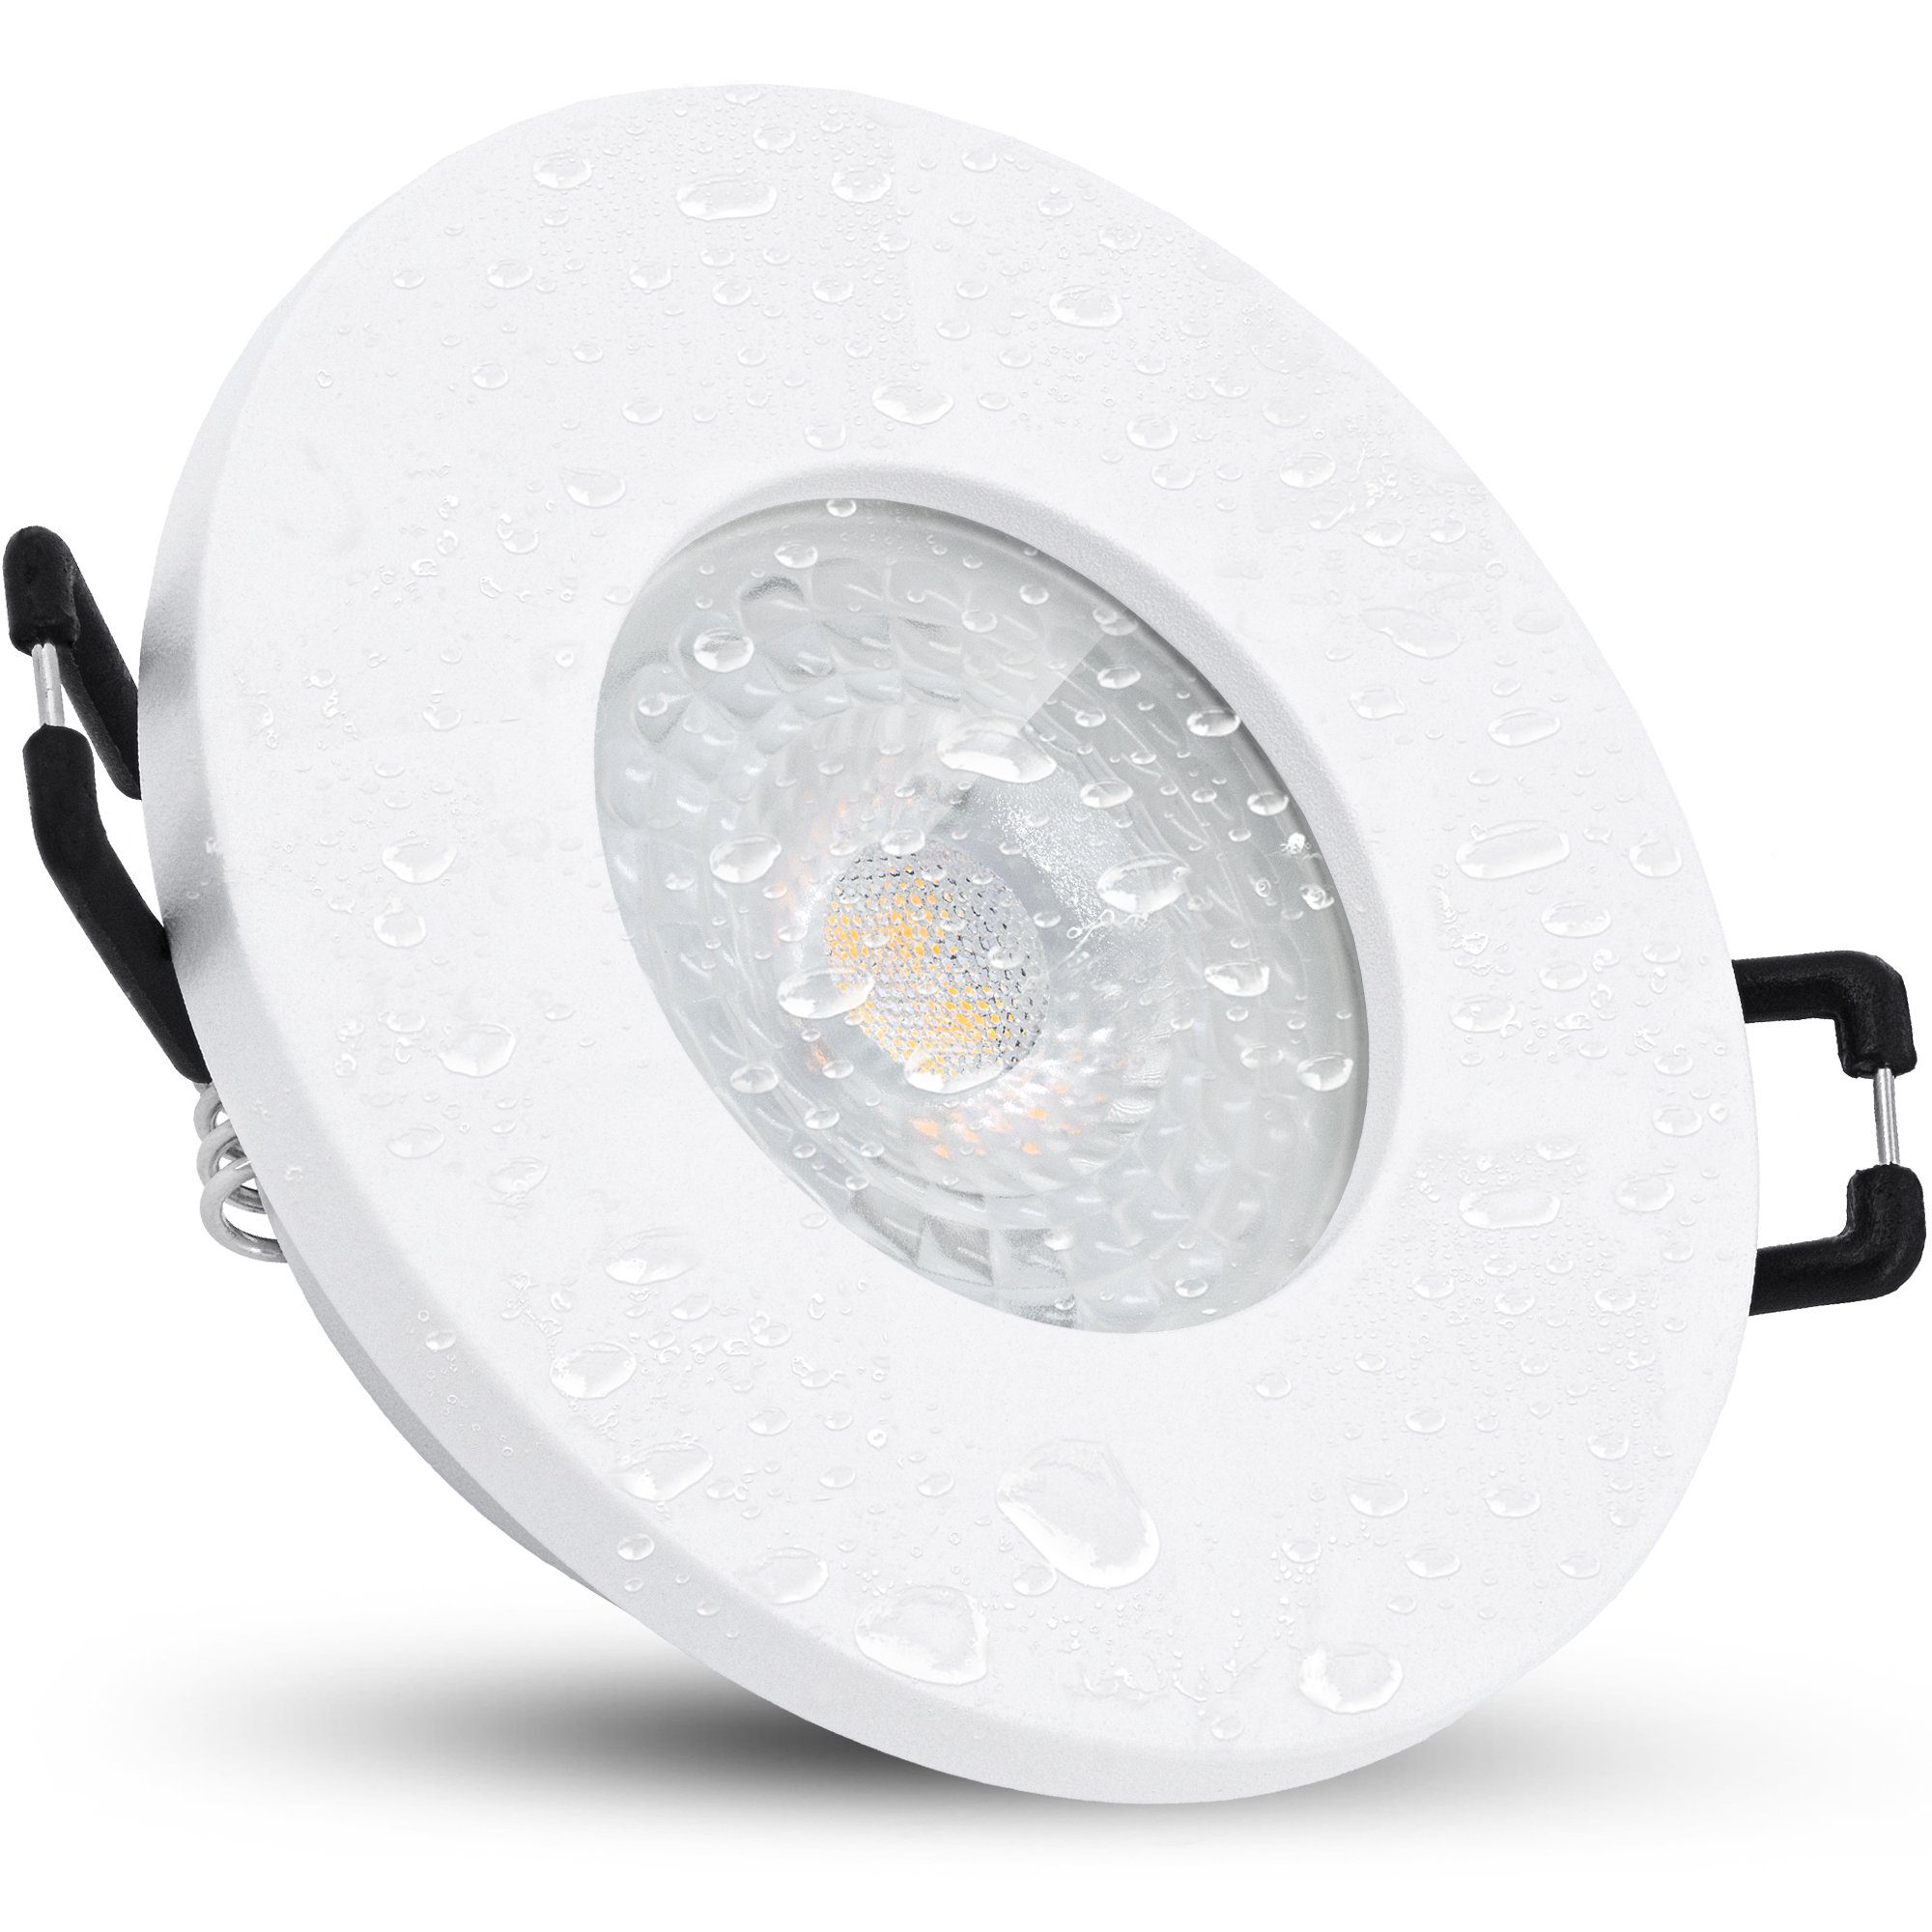 linovum LED Einbaustrahler Extra flache LED weiss Leuchtmittel inklusive, IP65 in LED rund 5W, Leuchtmittel Einbauleuchte inklusive & mit matt